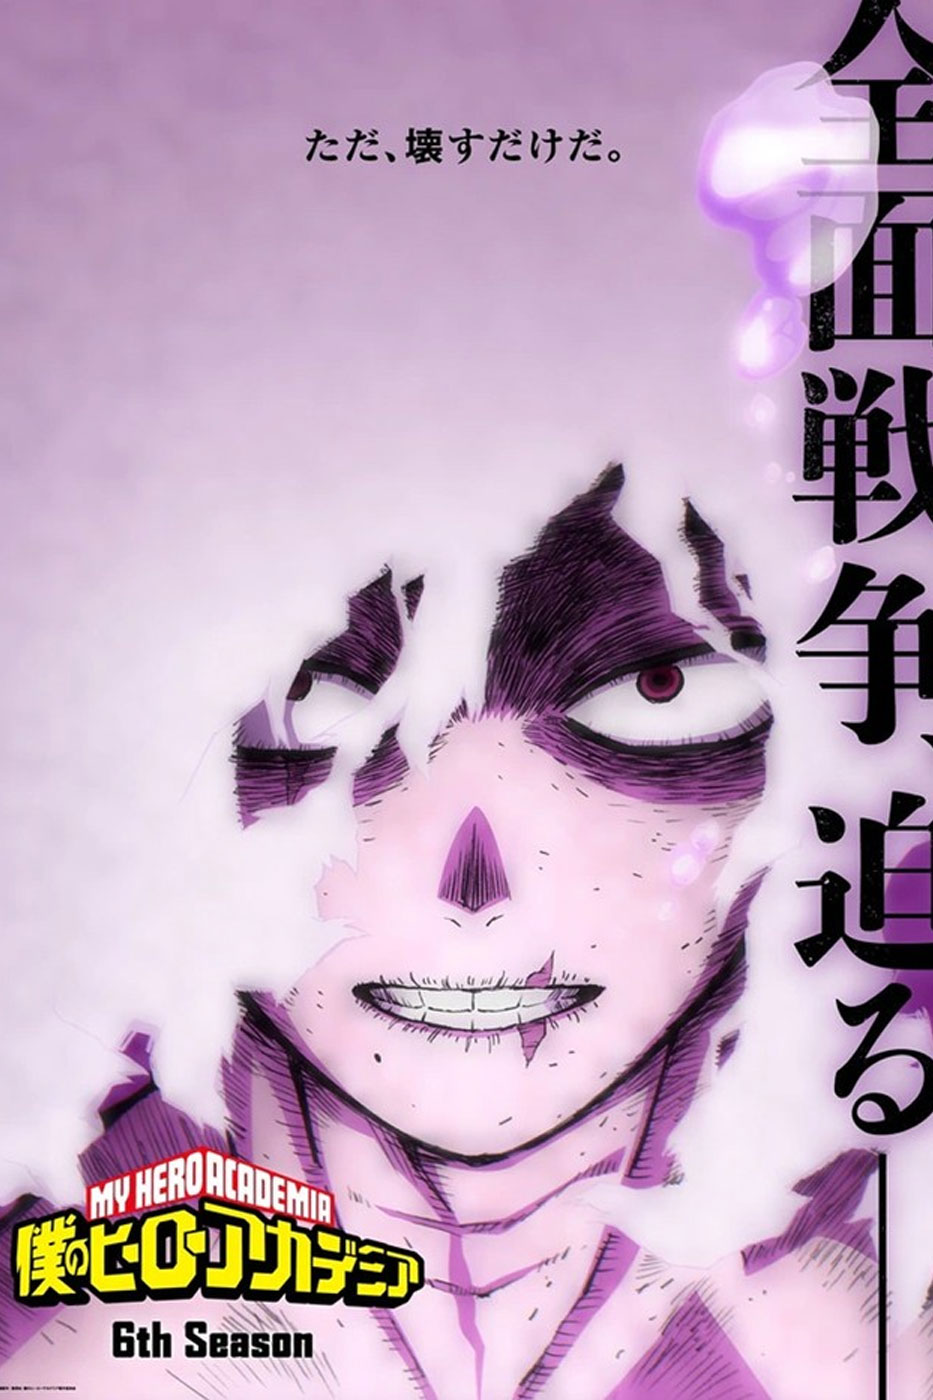 'My Hero Academia' Season 6 Poster Info entertainment manga anime Izuku Midoriya Shigaraki blue beige purple black